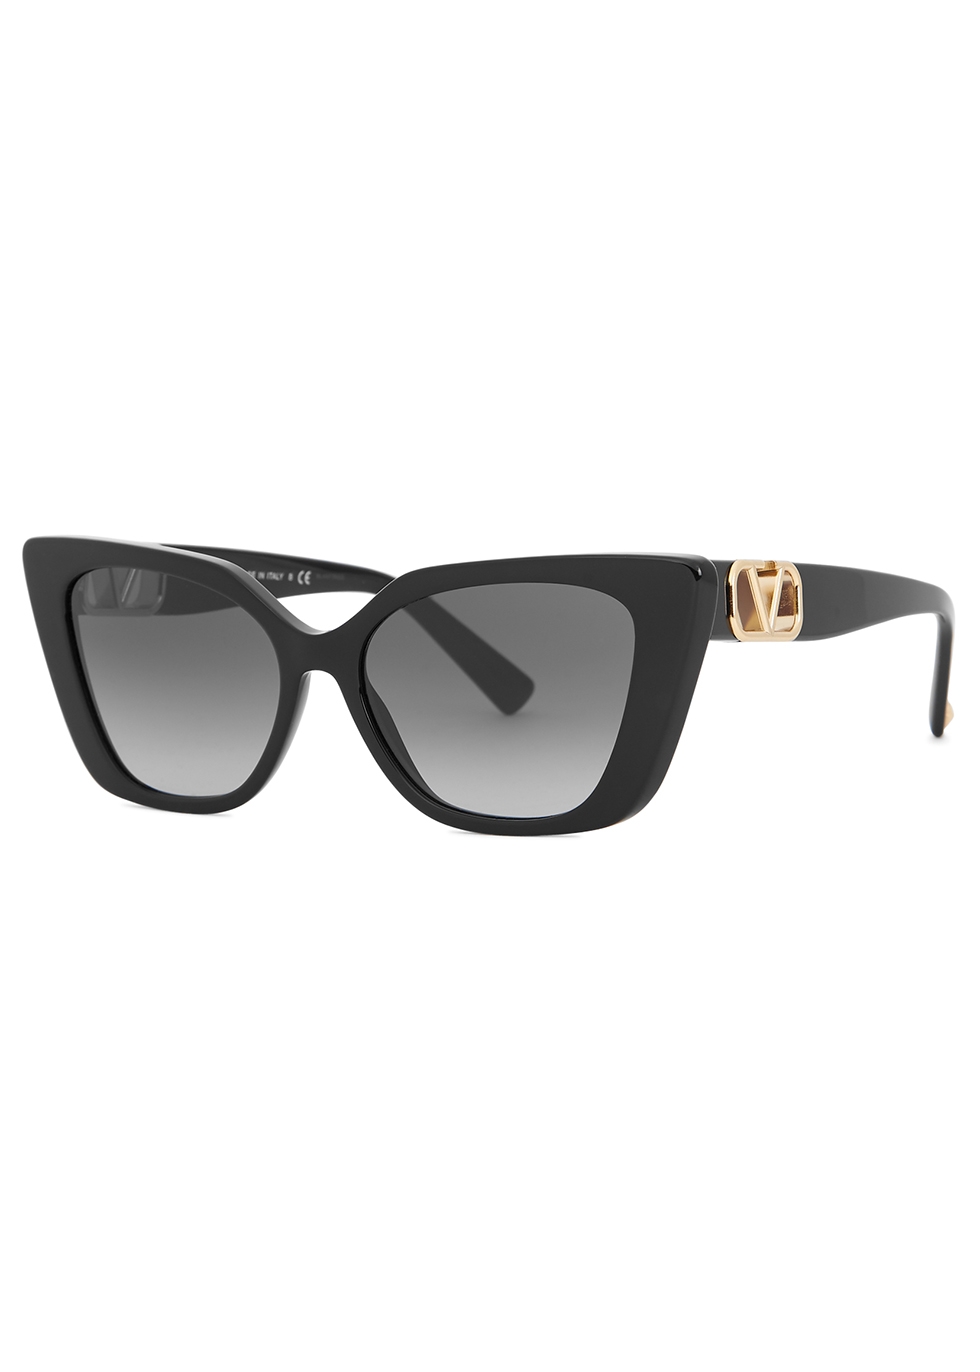 Valentino Valentino Garavani black cat-eye sunglasses - Harvey Nichols